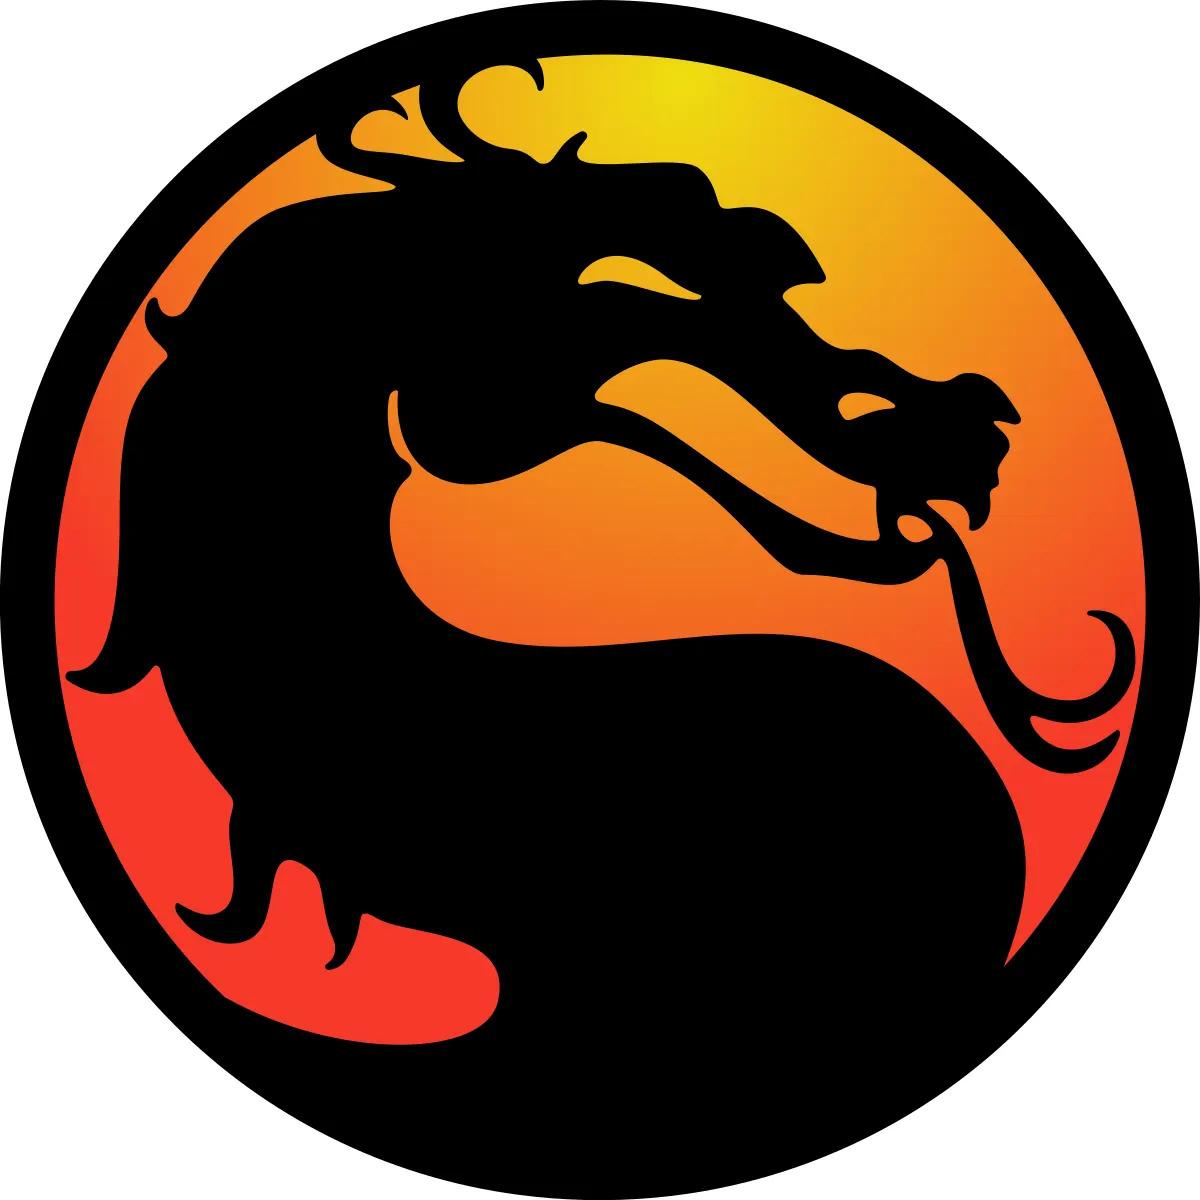 Mortal Kombat 1 + 2 + 3 Bundle PC Download for $1.49